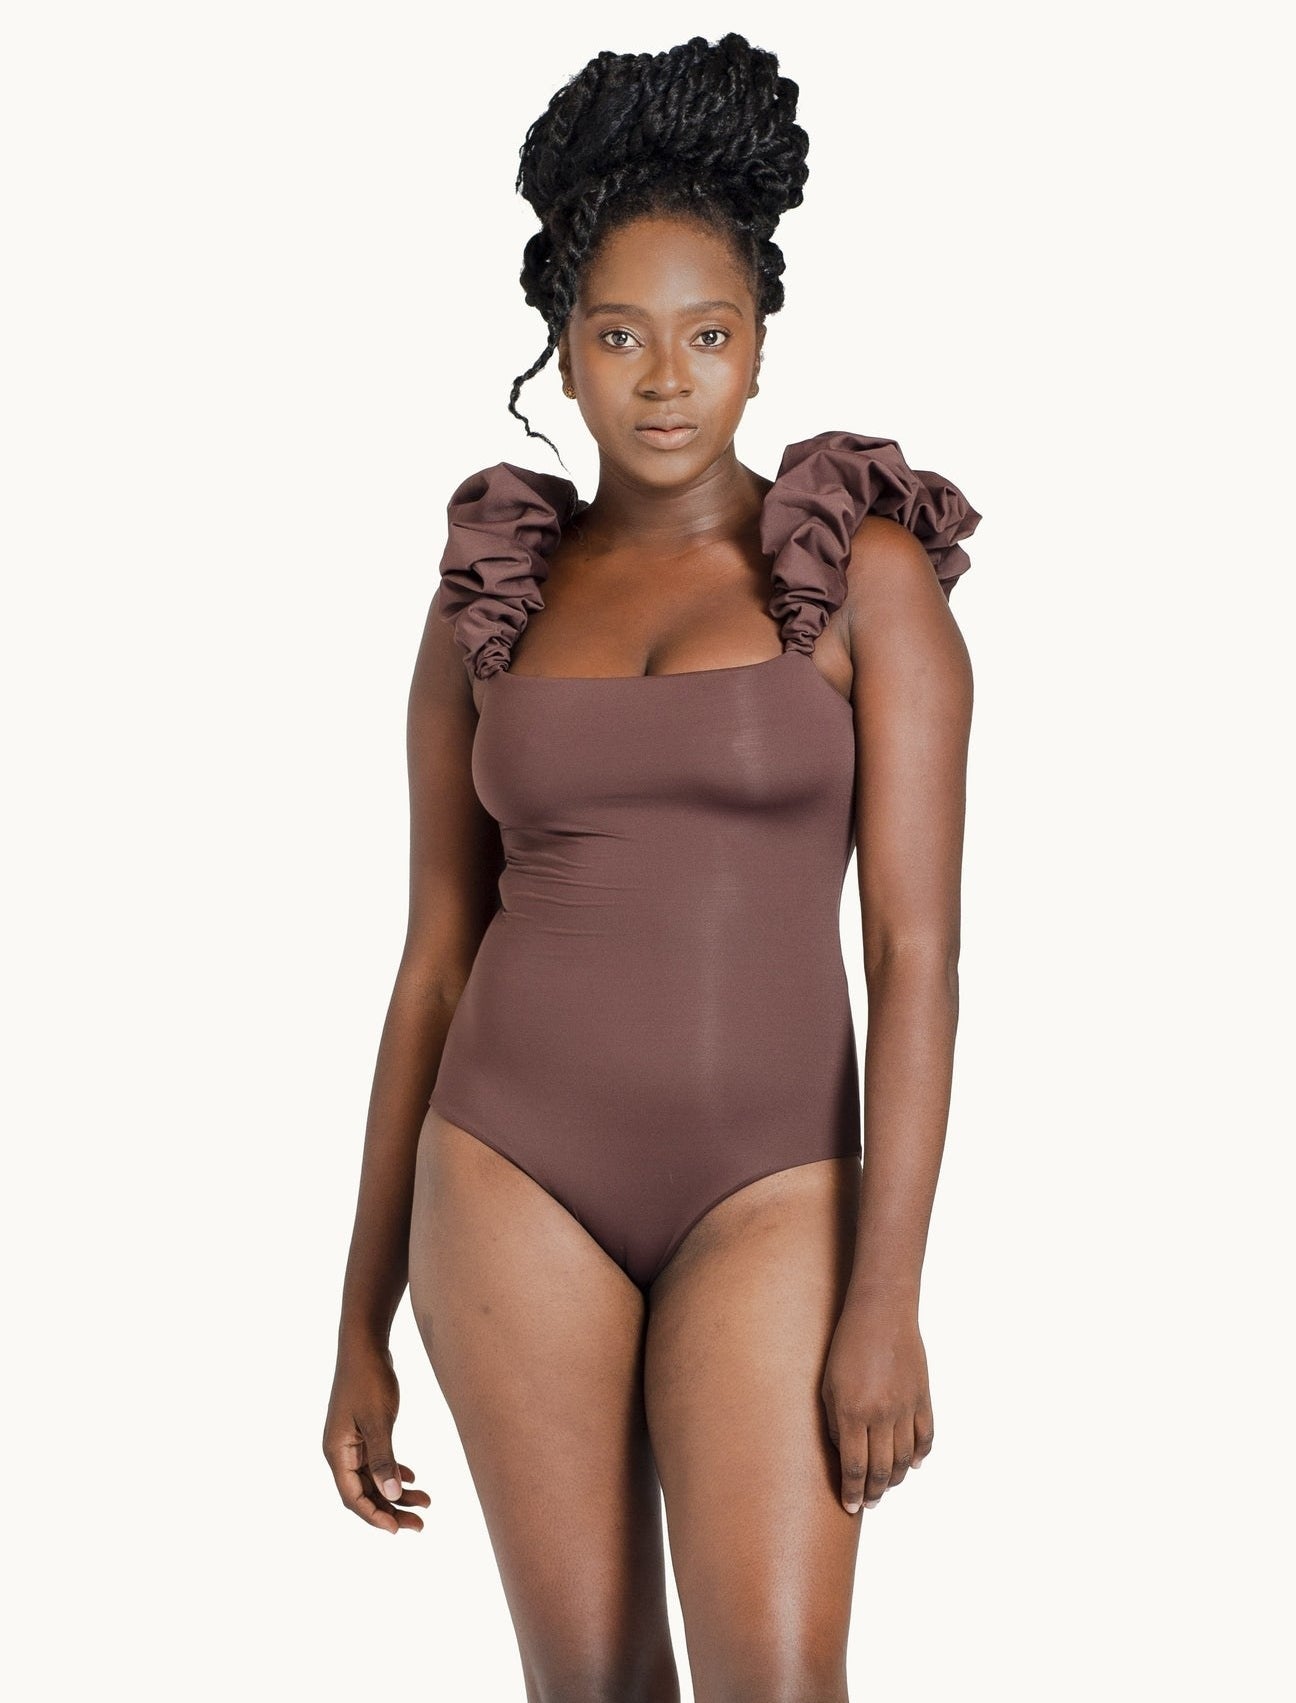 Model wearing brown one piece